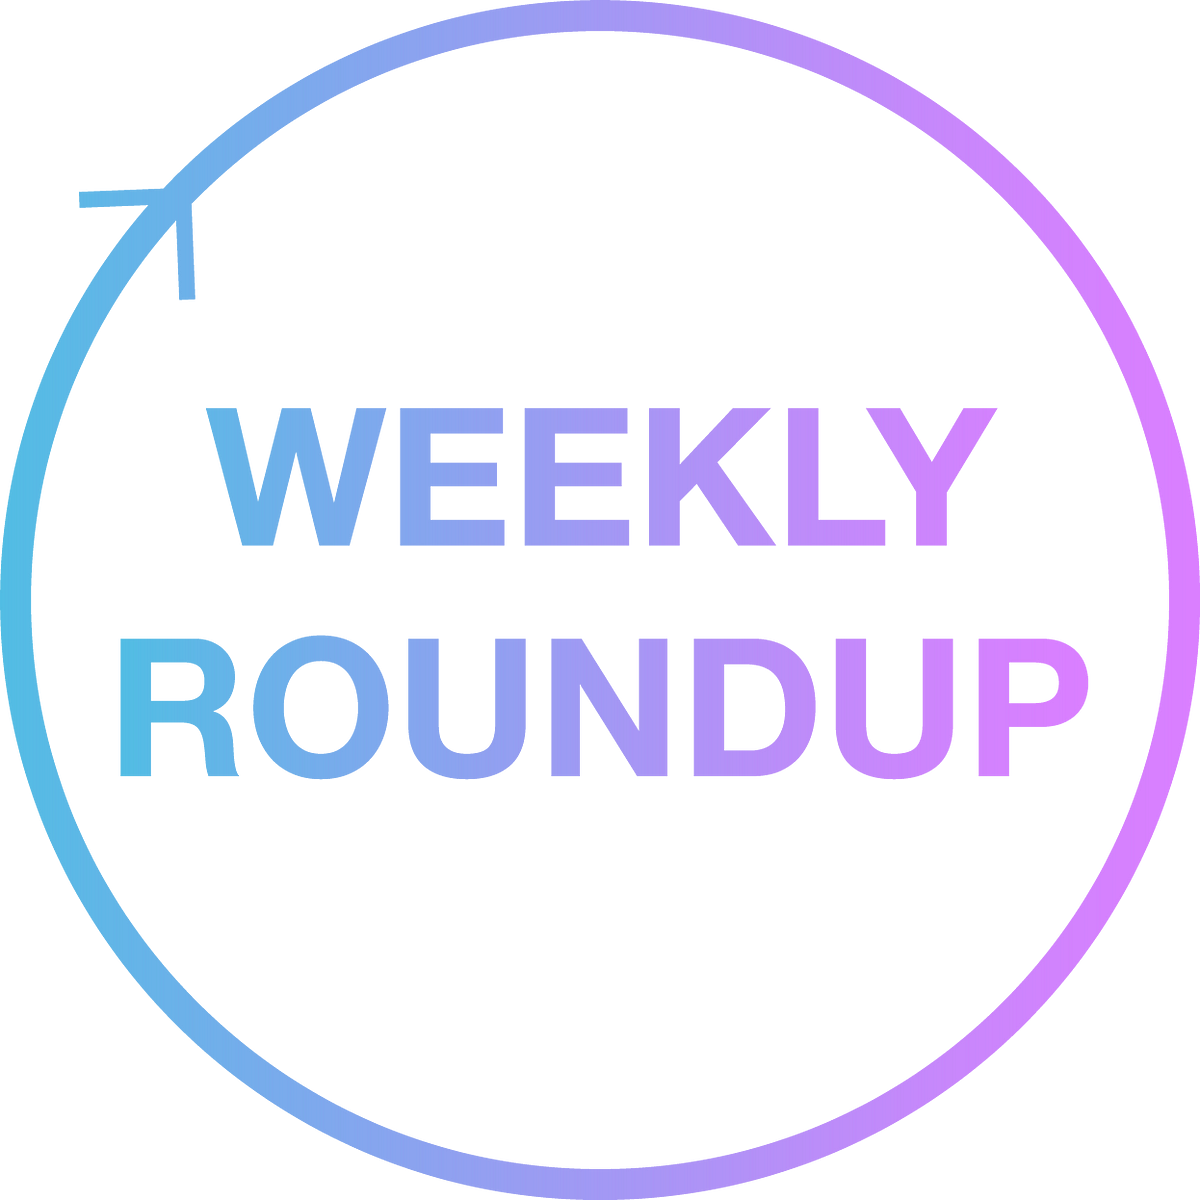 Weekly roundup